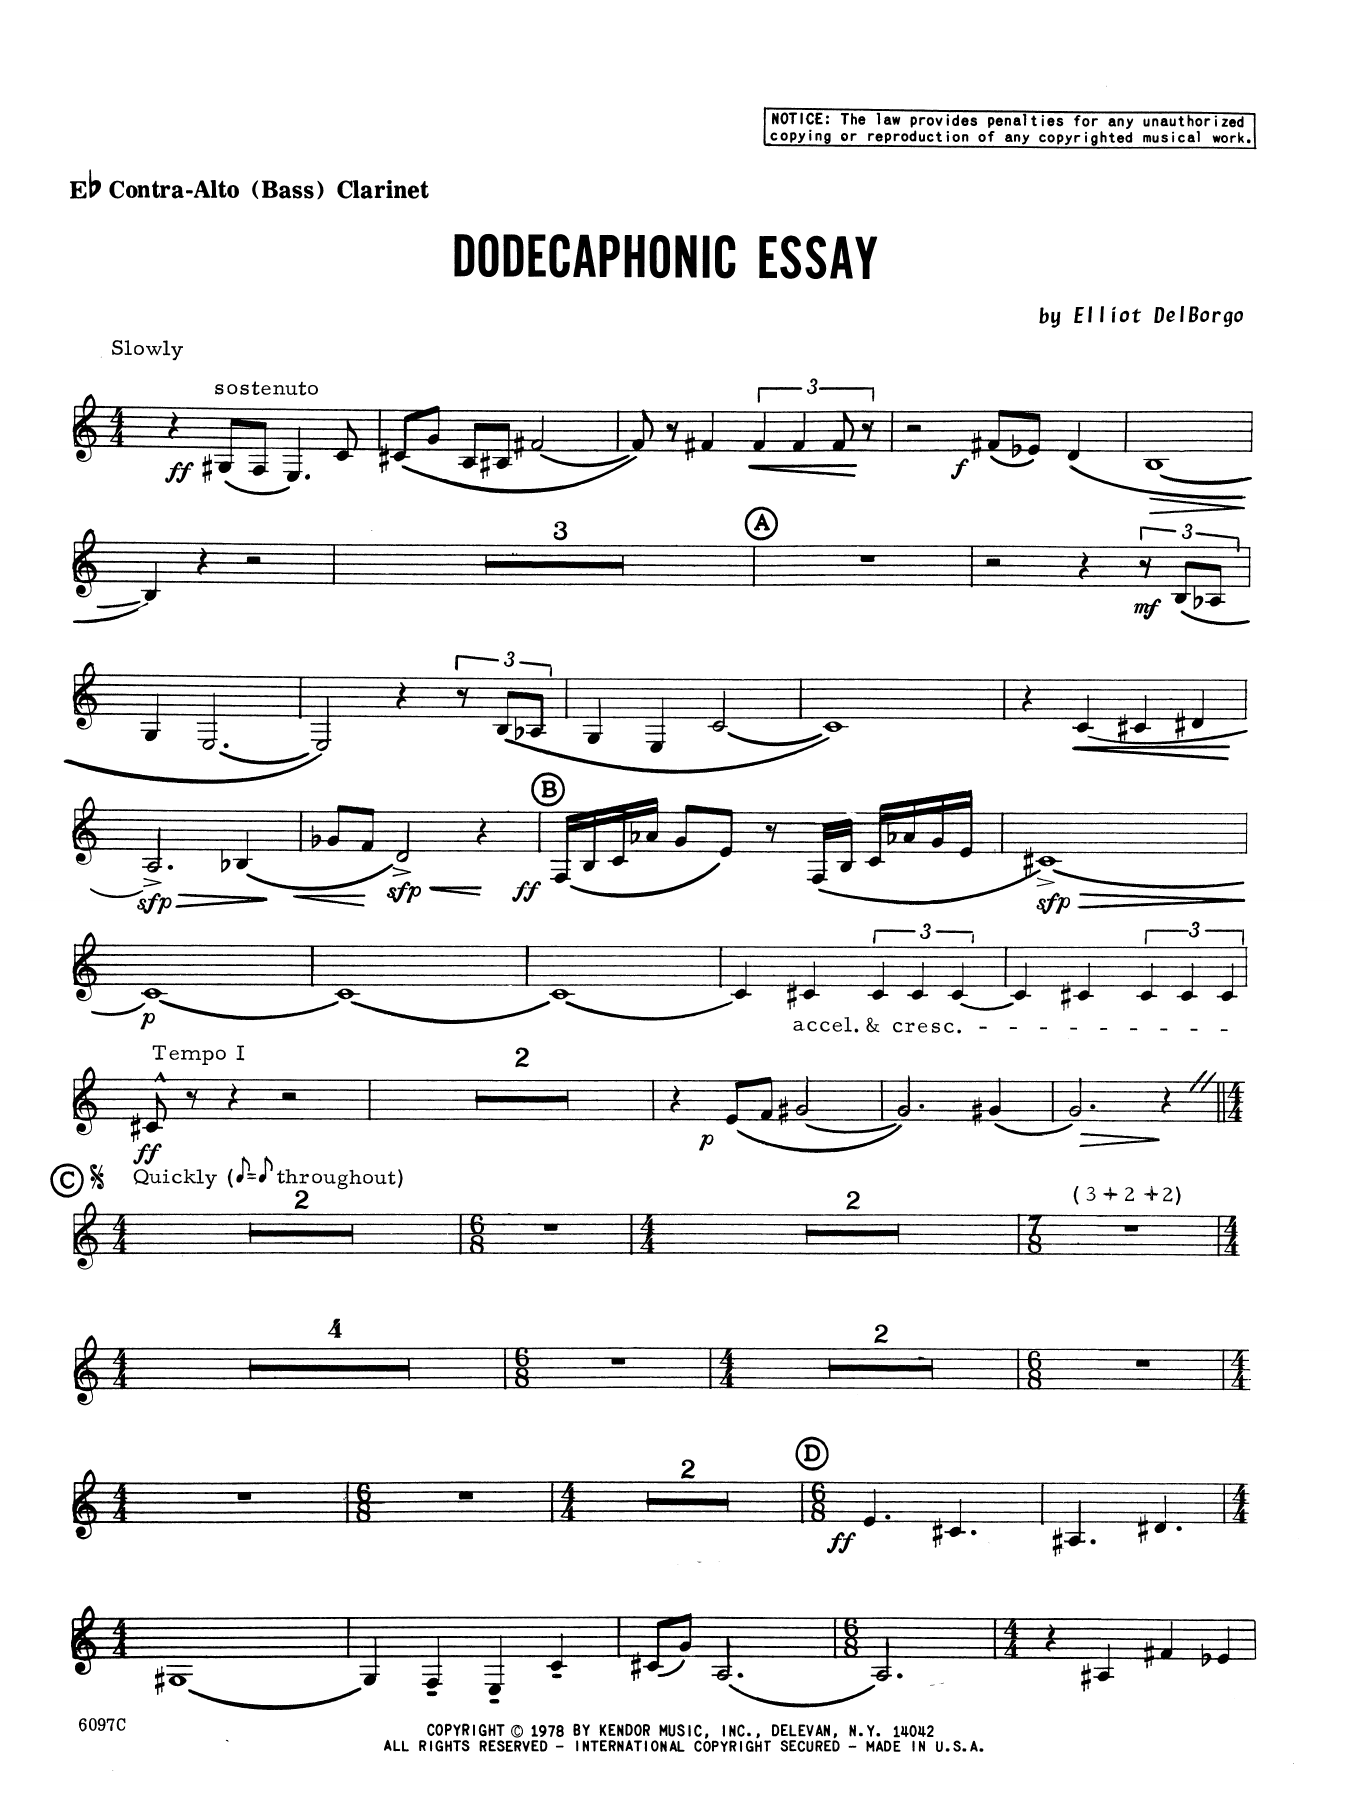 Download Elliot A. Del Borgo Dodecaphonic Essay - Eb Contra Bass Cla Sheet Music